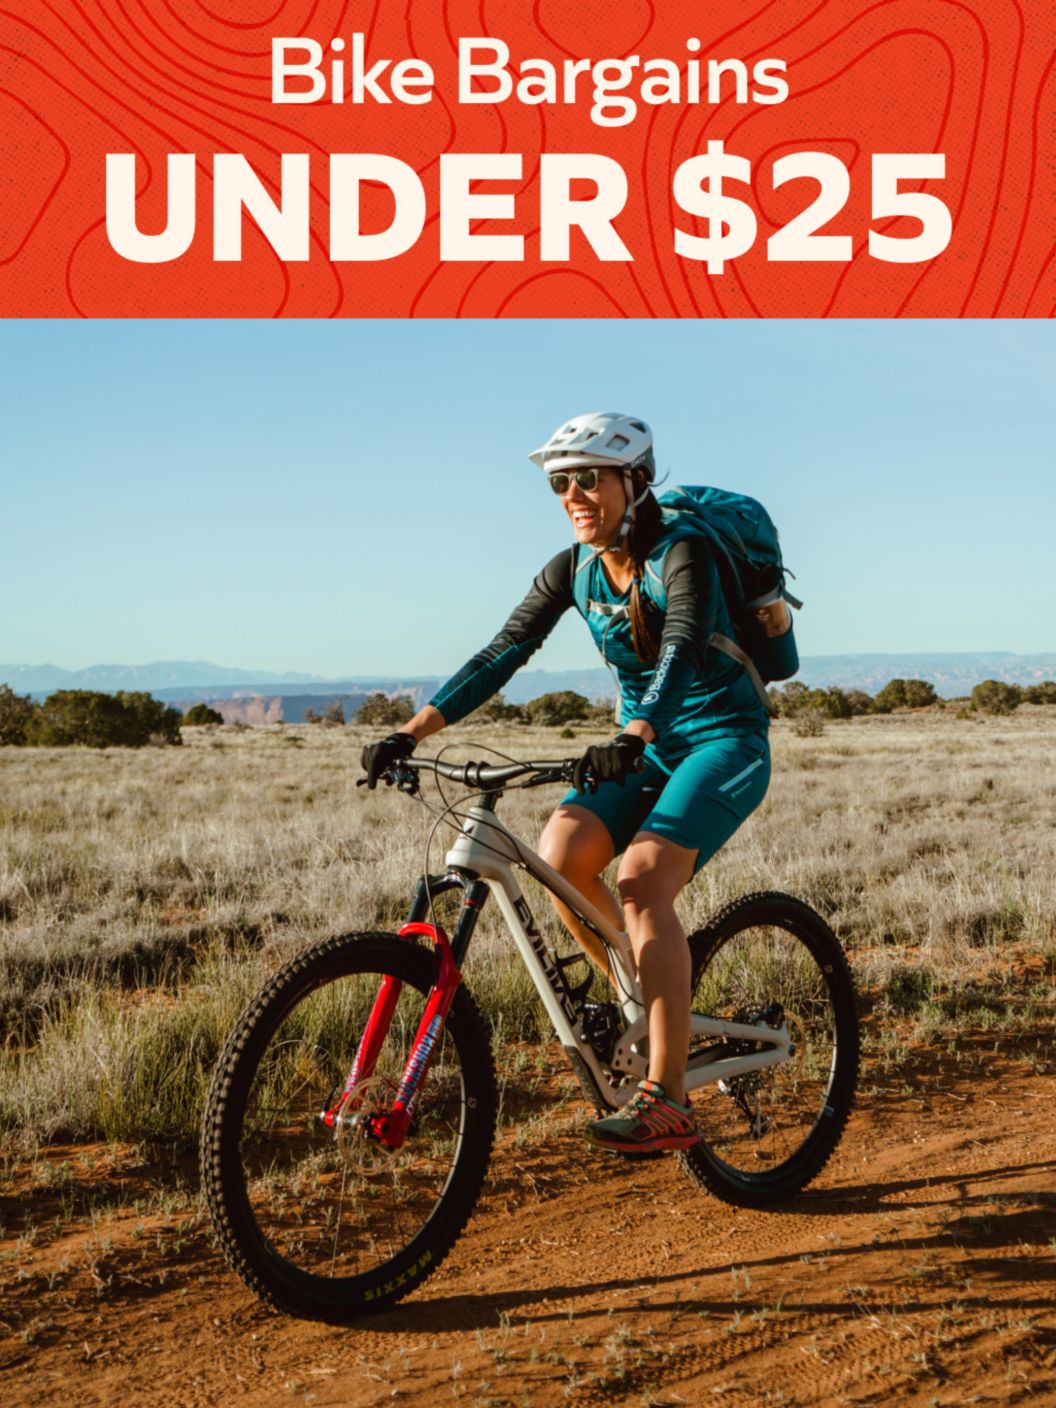    Bike Bargains Under $25    